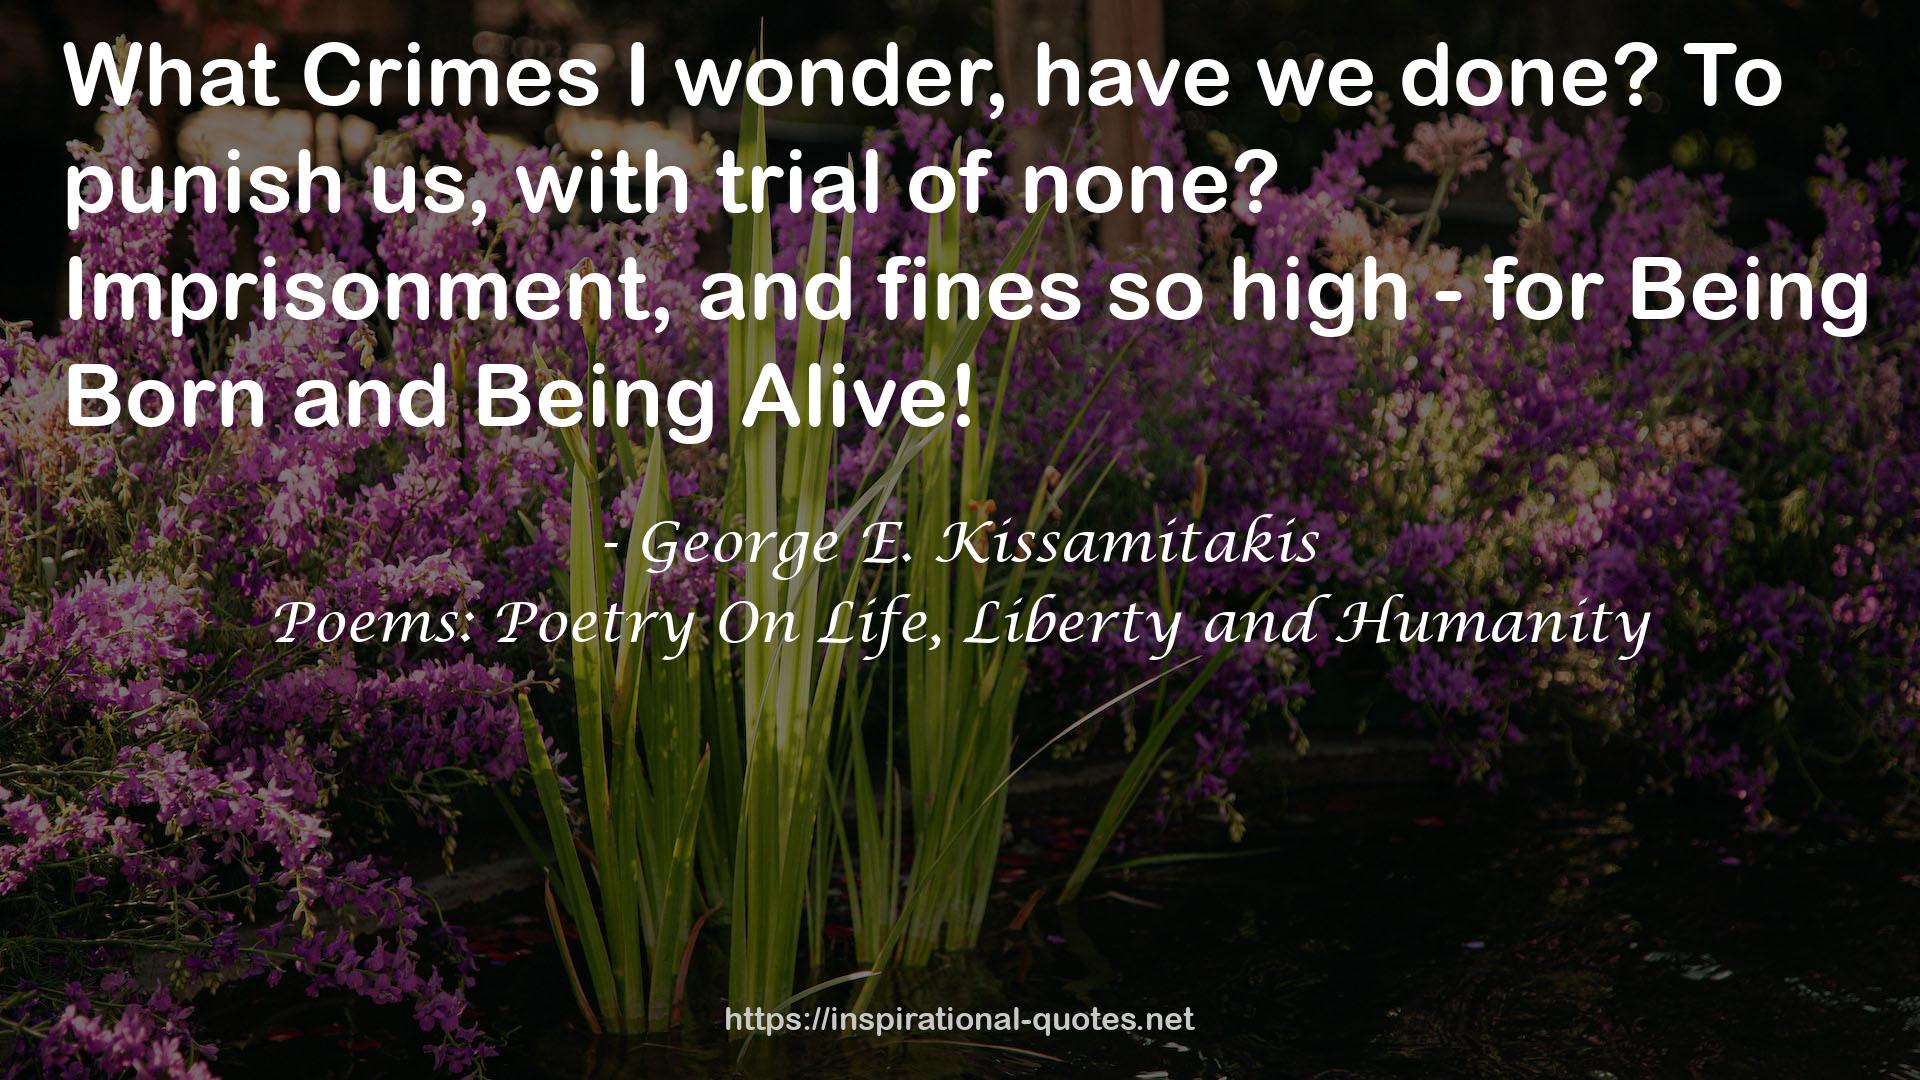 George E. Kissamitakis QUOTES